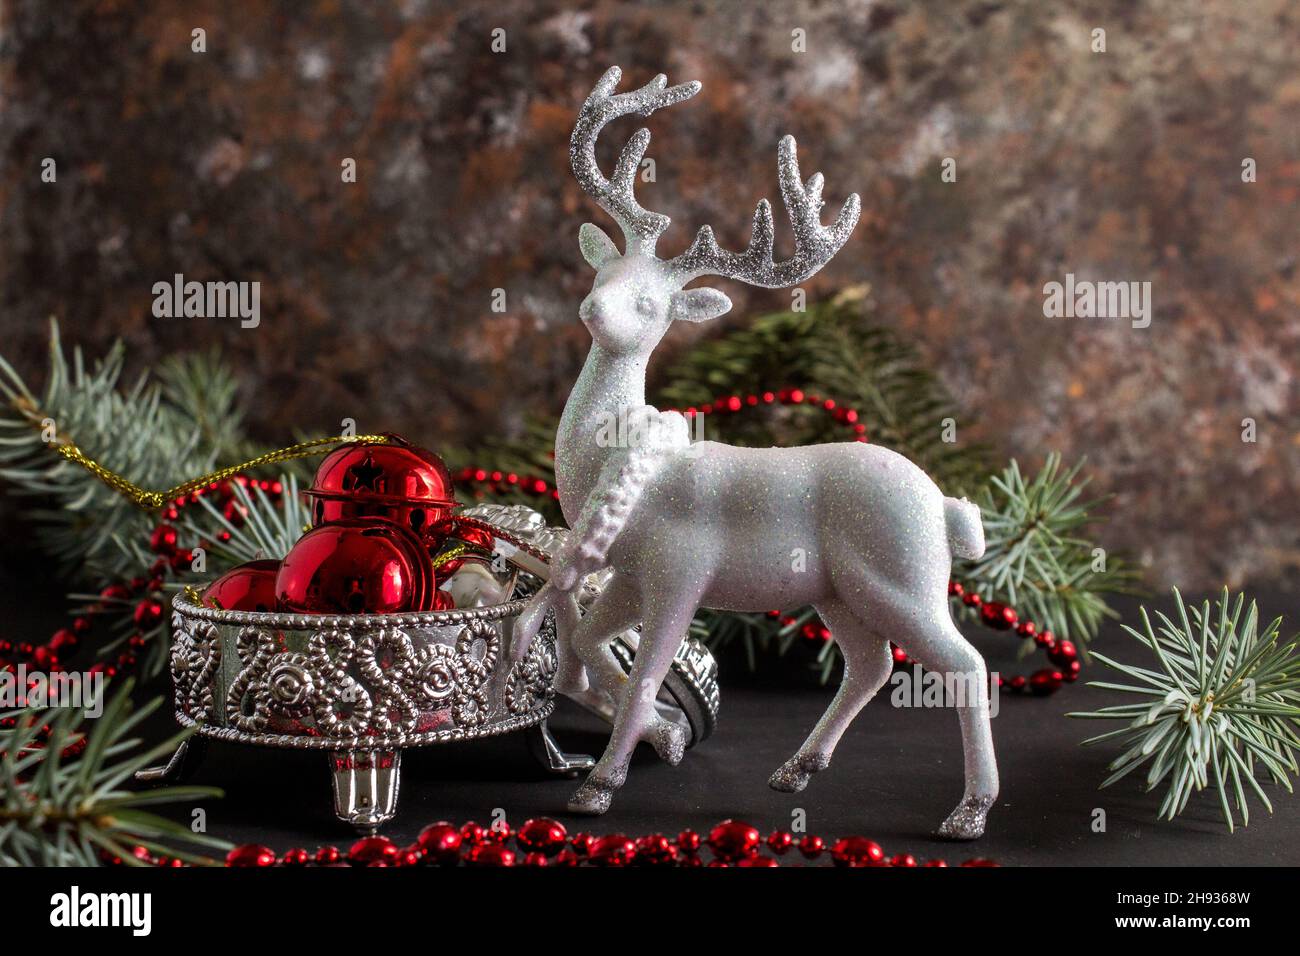 20 RUSTIC PLAIN WOODEN SHAPES CHRISTMAS SCENE Reindeer Elk FESTIVE HANGING DECOR 